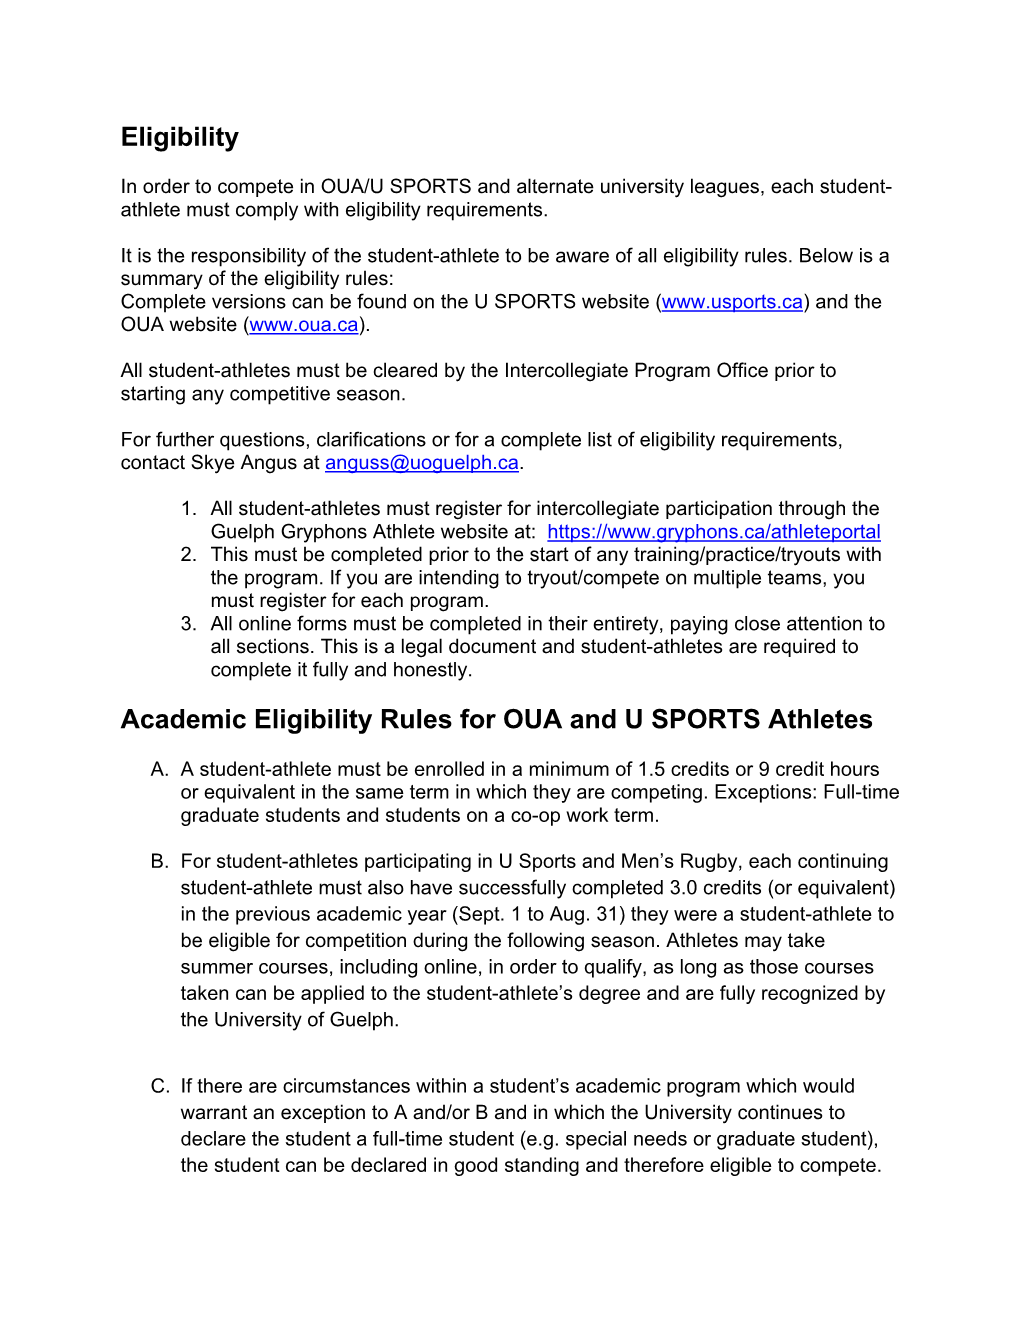 Eligibility Academic Eligibility Rules for OUA and U SPORTS Athletes